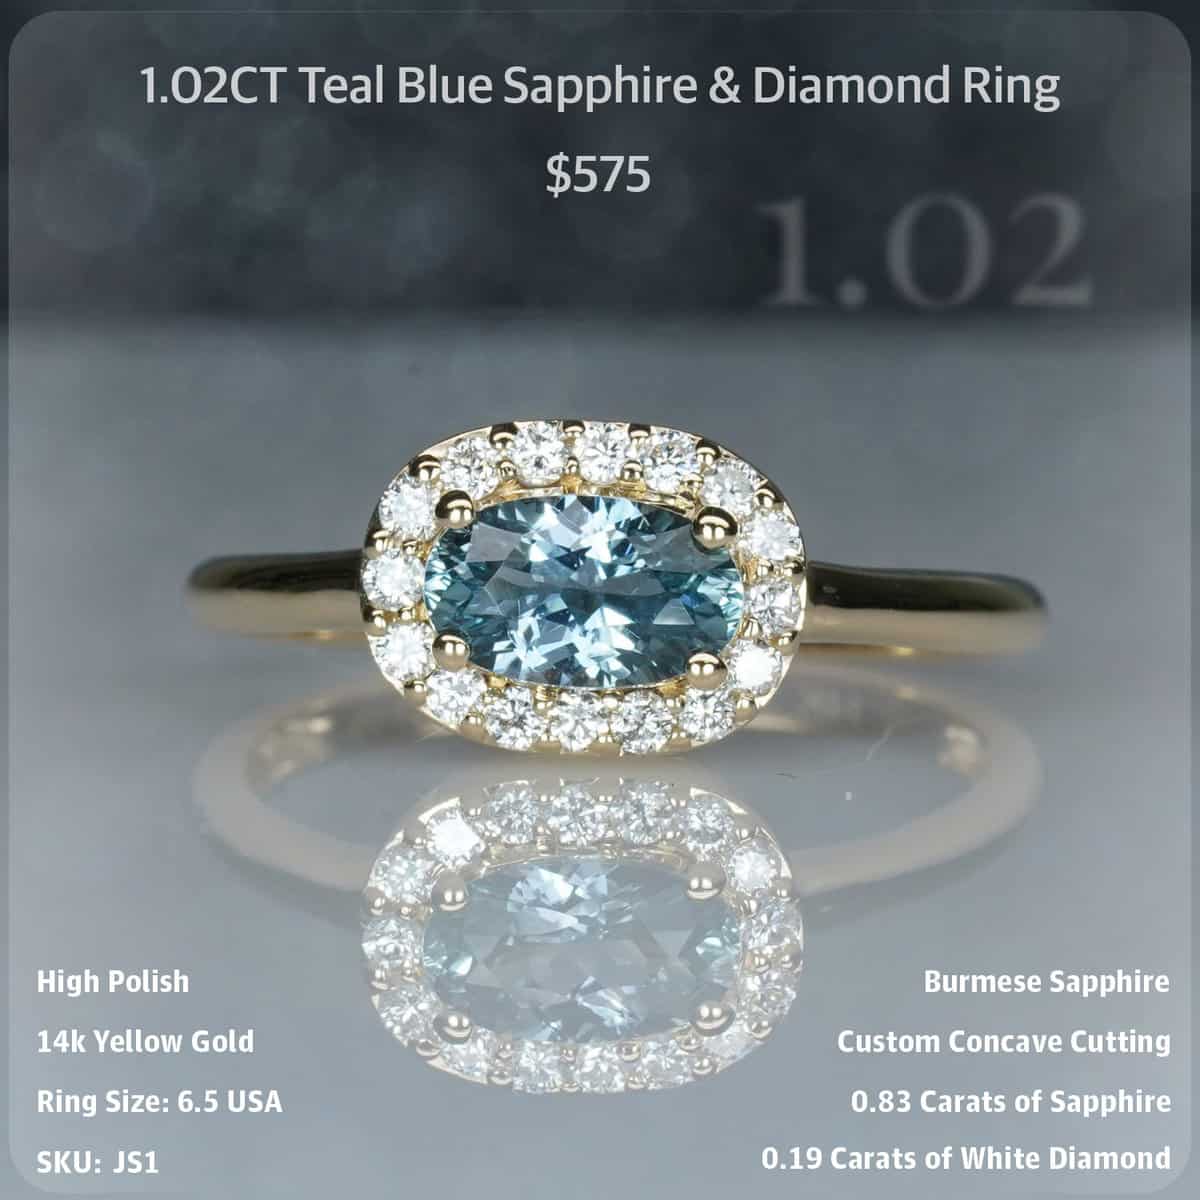 1.02CT Teal Blue Sapphire & Diamond Ring